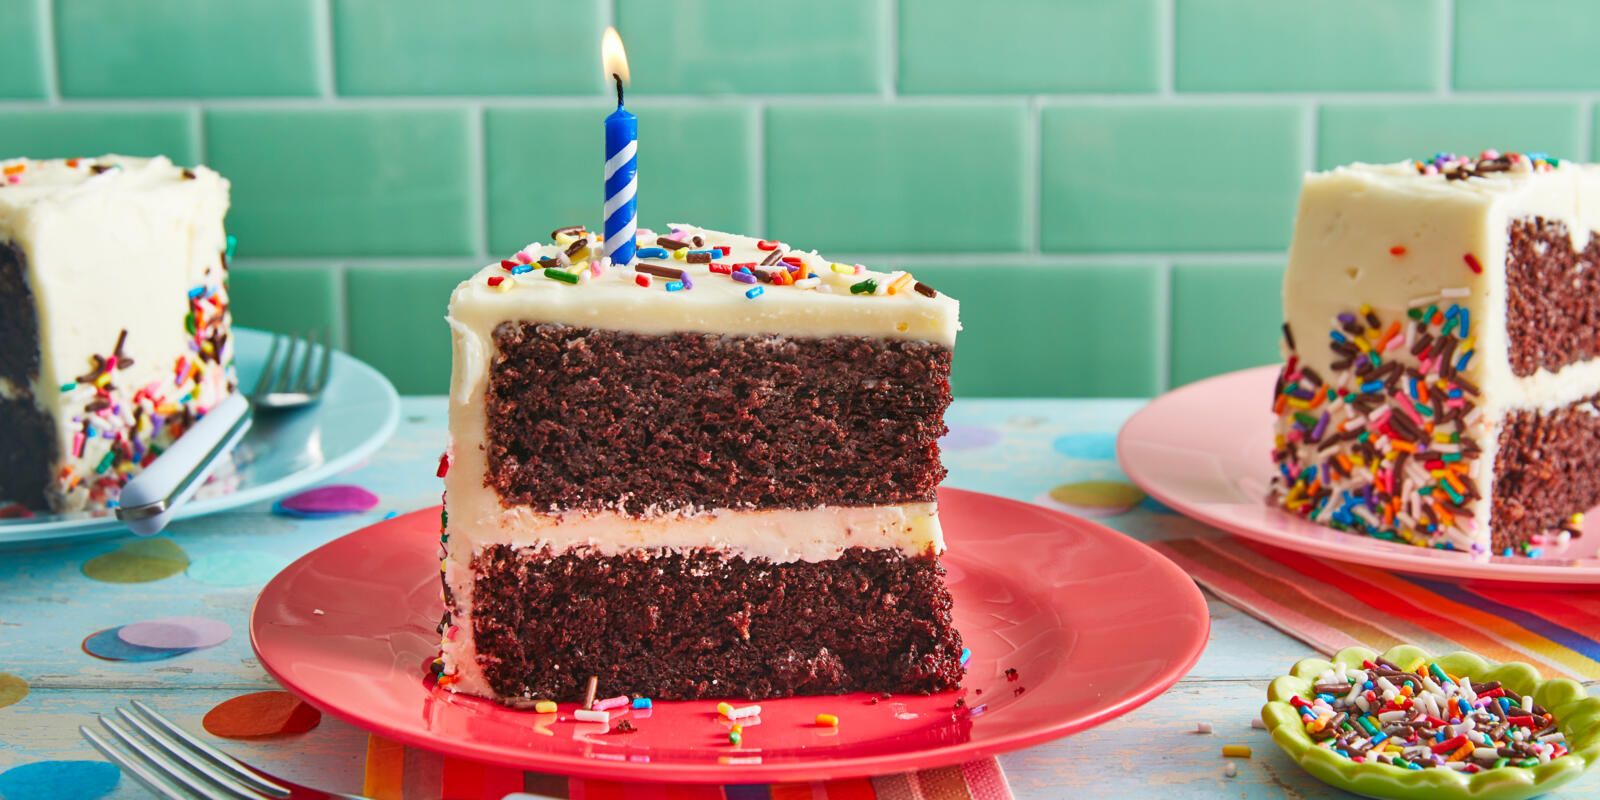 Easy and Beautiful Pop-up Birthday Gift Ideas /DIY Paper gift card /  Handmade Birthday Card - YouTube